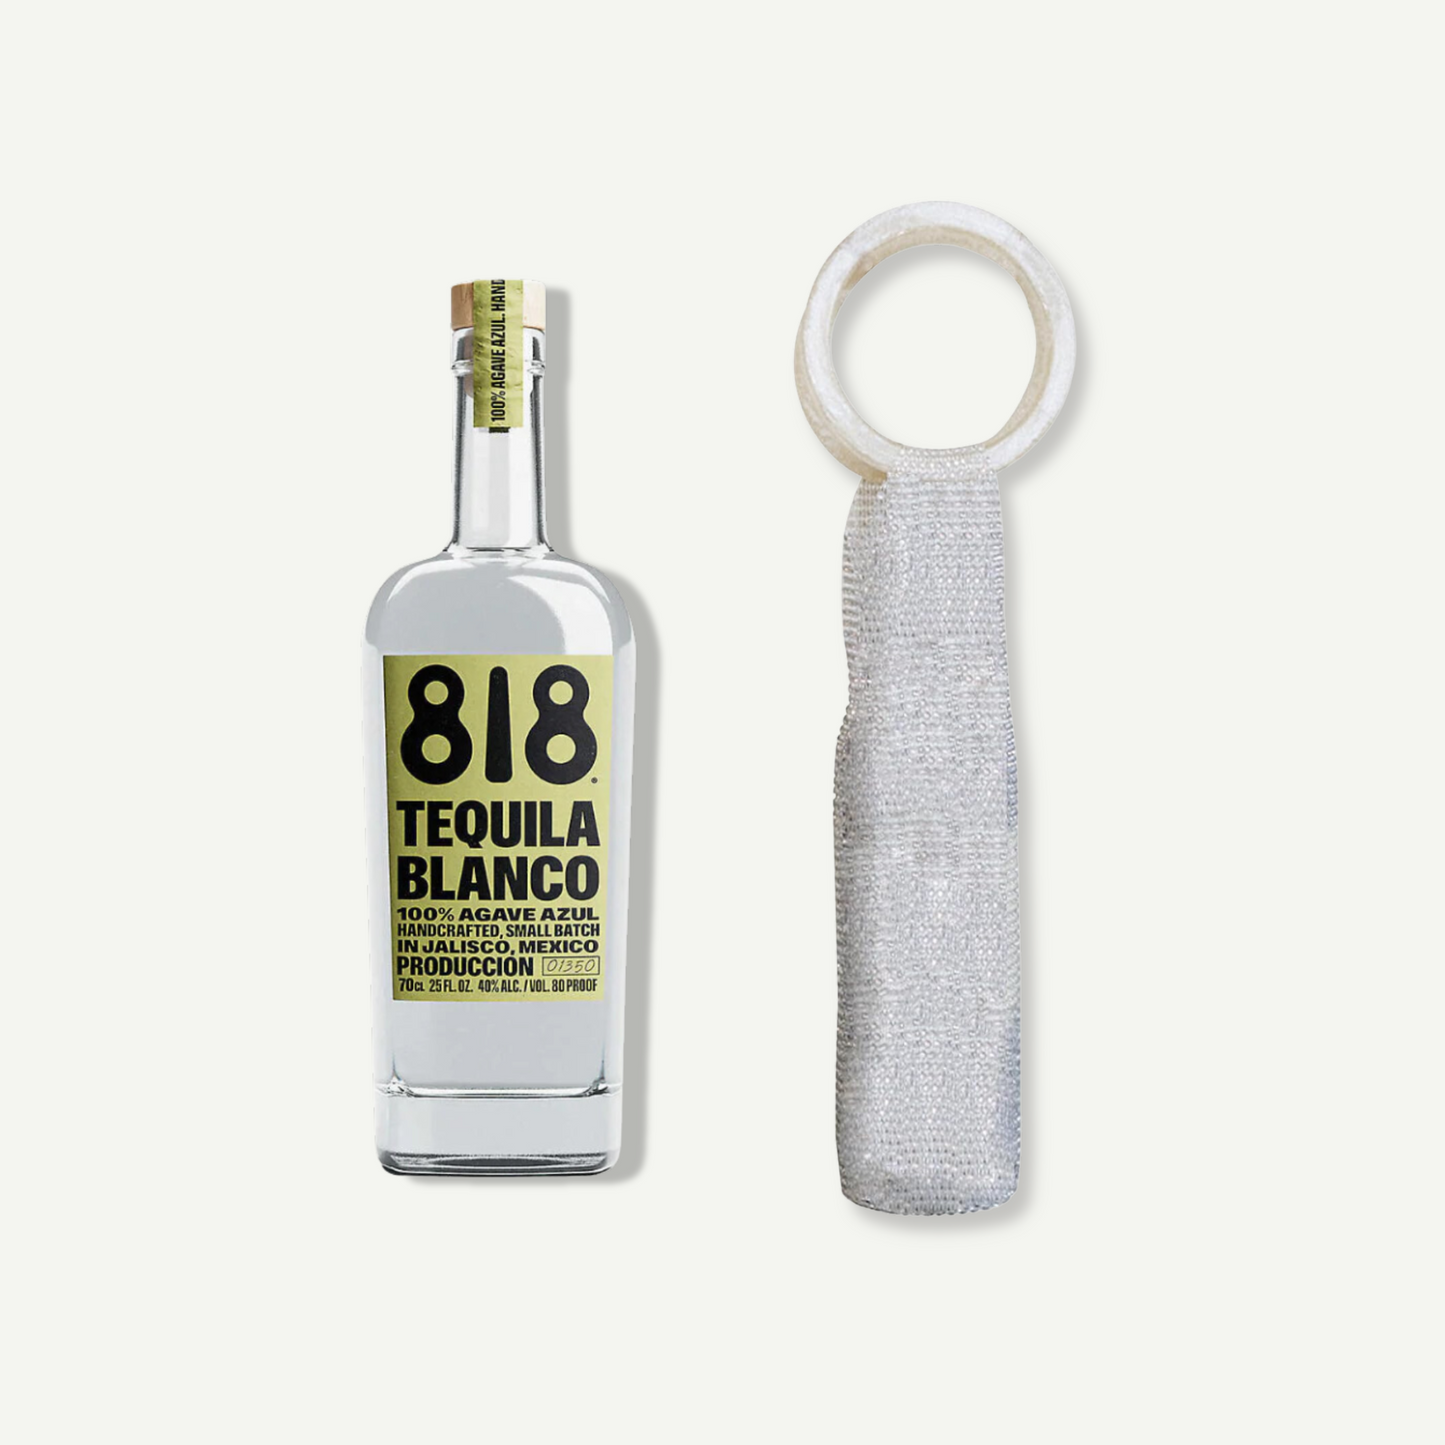 818 Blanco Tequila + Luxe Diamante Wine Bag